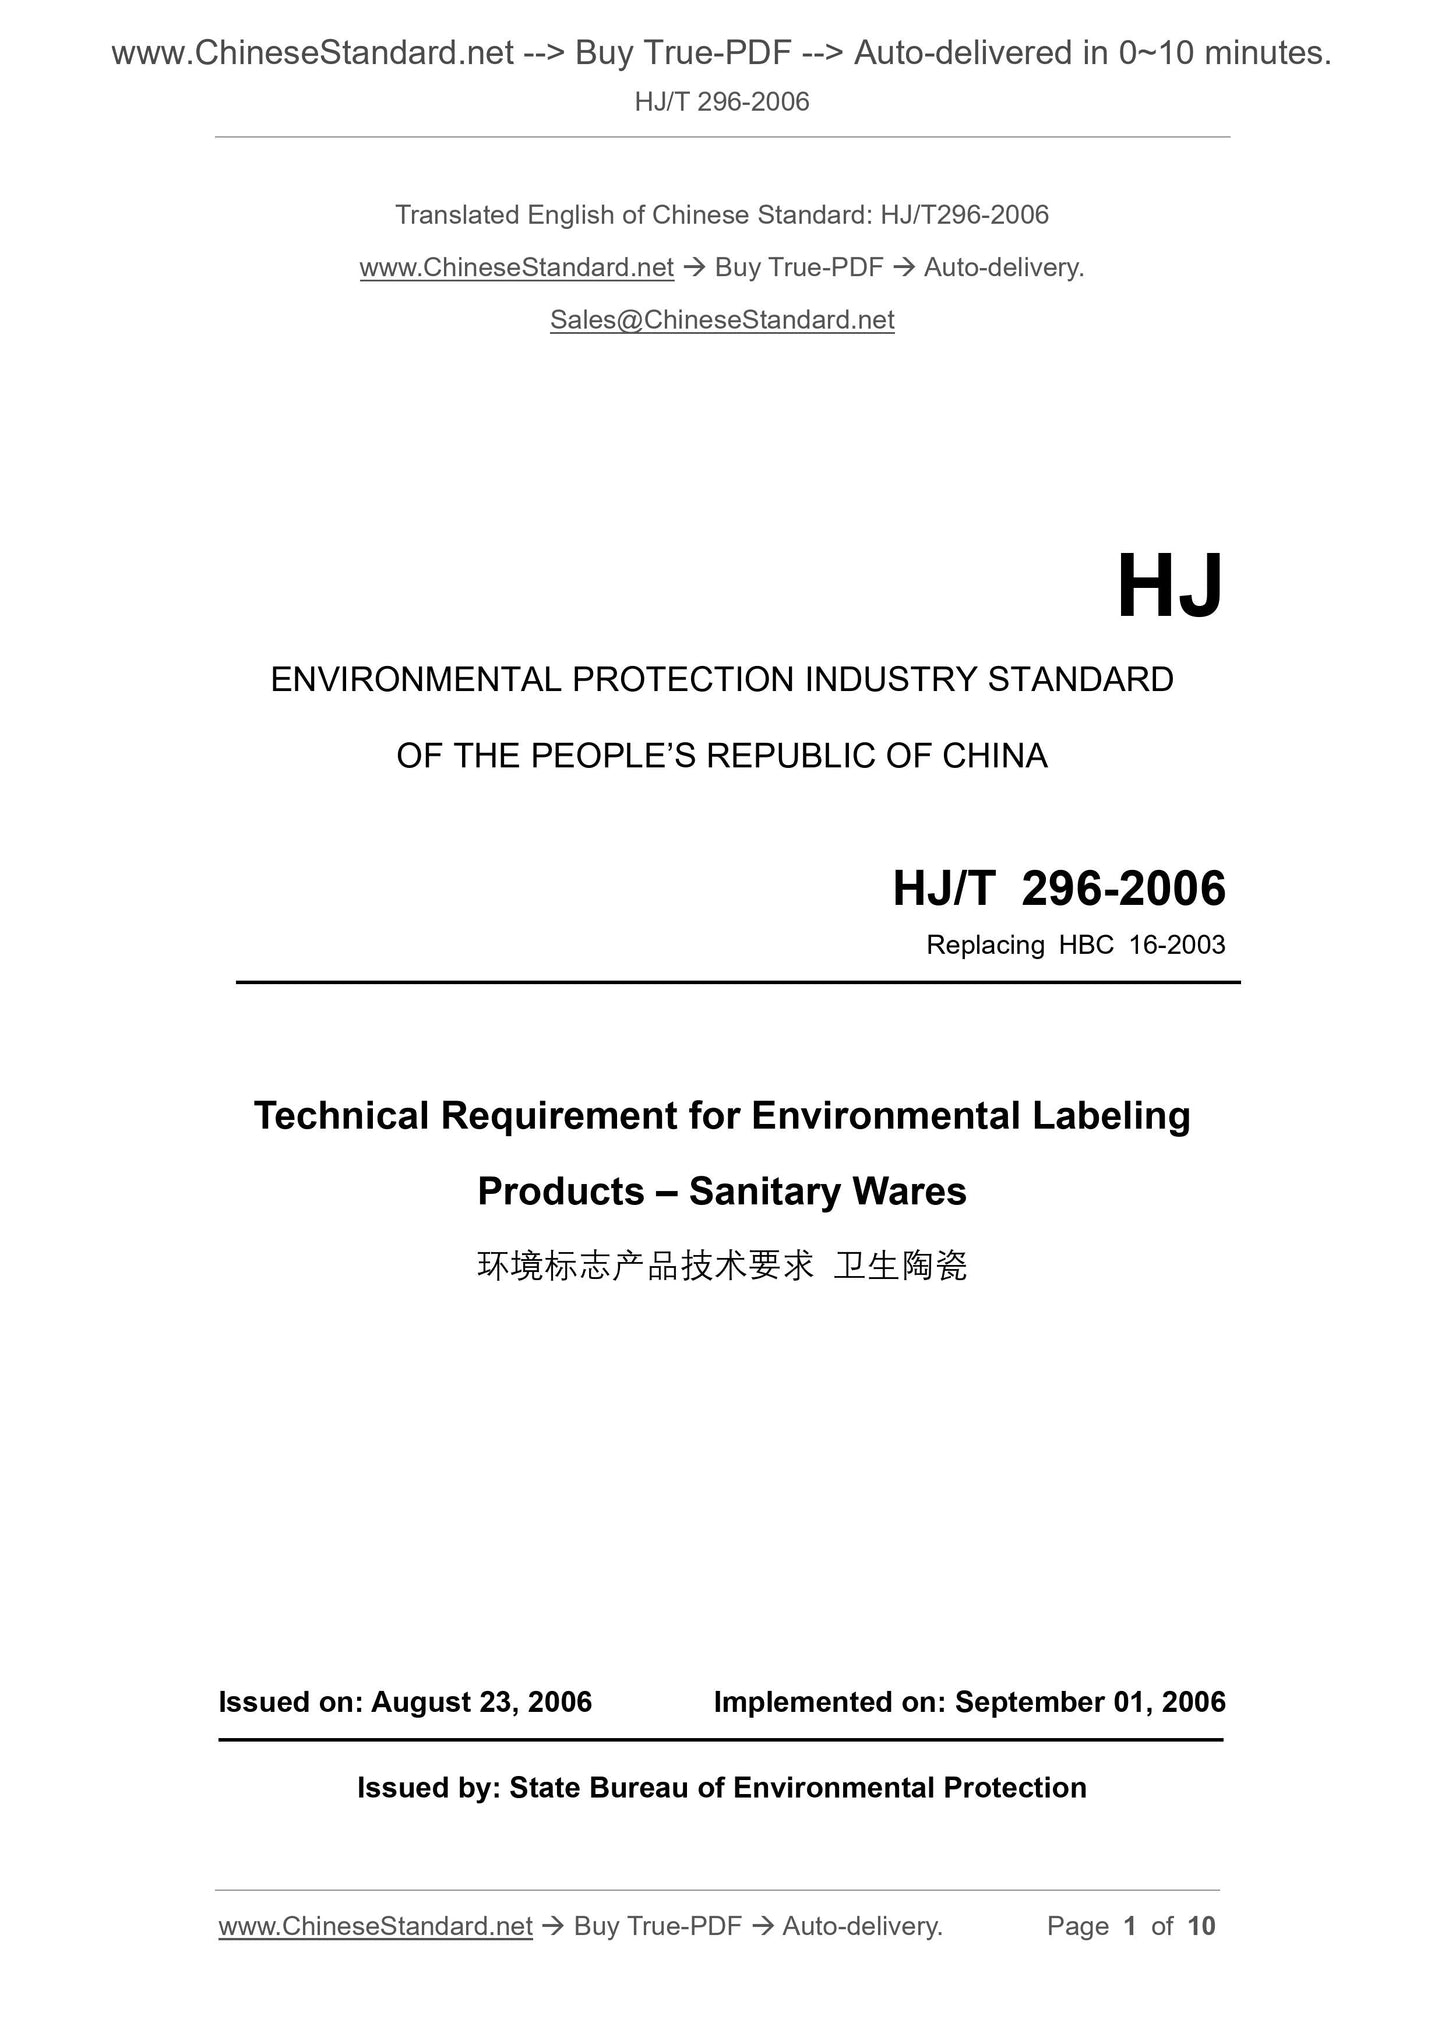 HJ/T 296-2006 Page 1